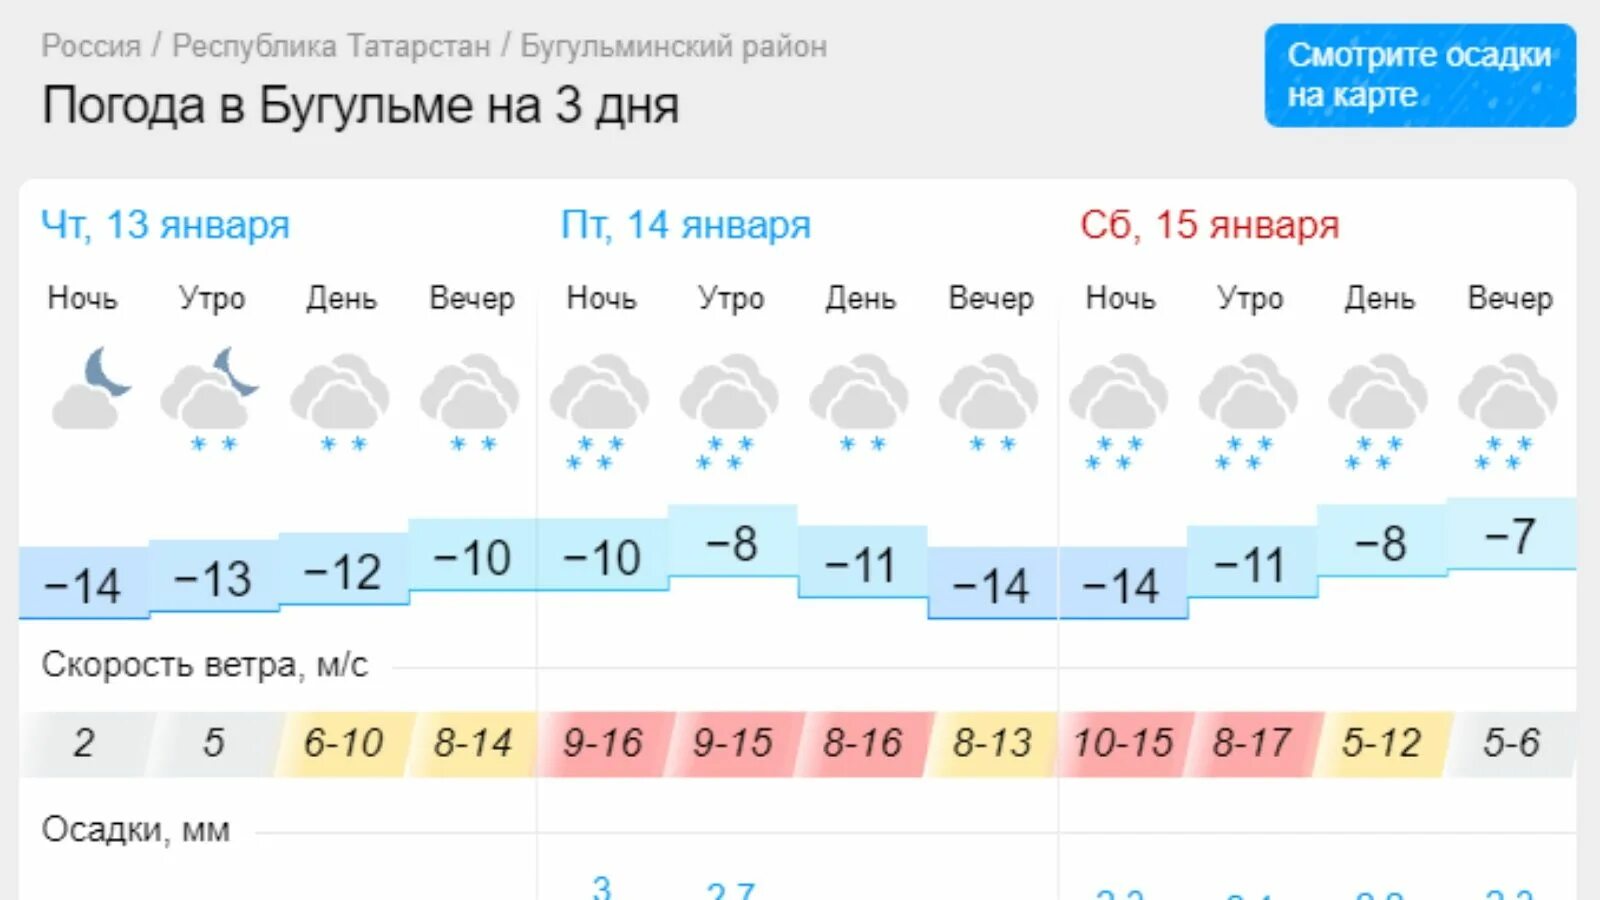 Погода в часах татарстан. Погода в Бугульме. Погода в Татарстане. Климат Татарстана. Погода в Татарстане на 14 дней.